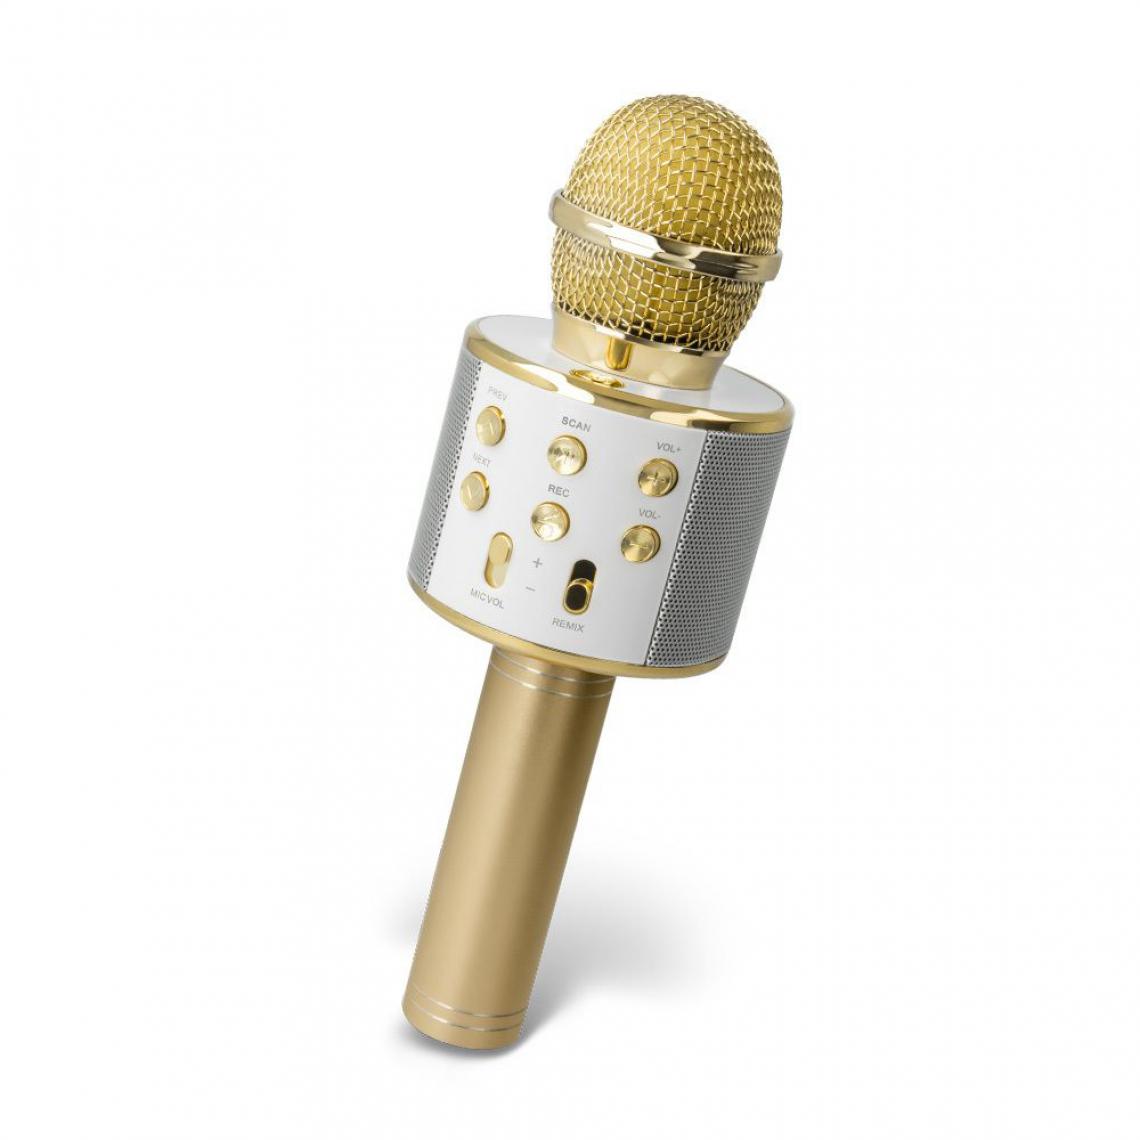 Ozzzo - Microphone Karaoke bluetooth haut parleur ozzzo Gold Or pour Oukitel C17 Pro - Autres accessoires smartphone